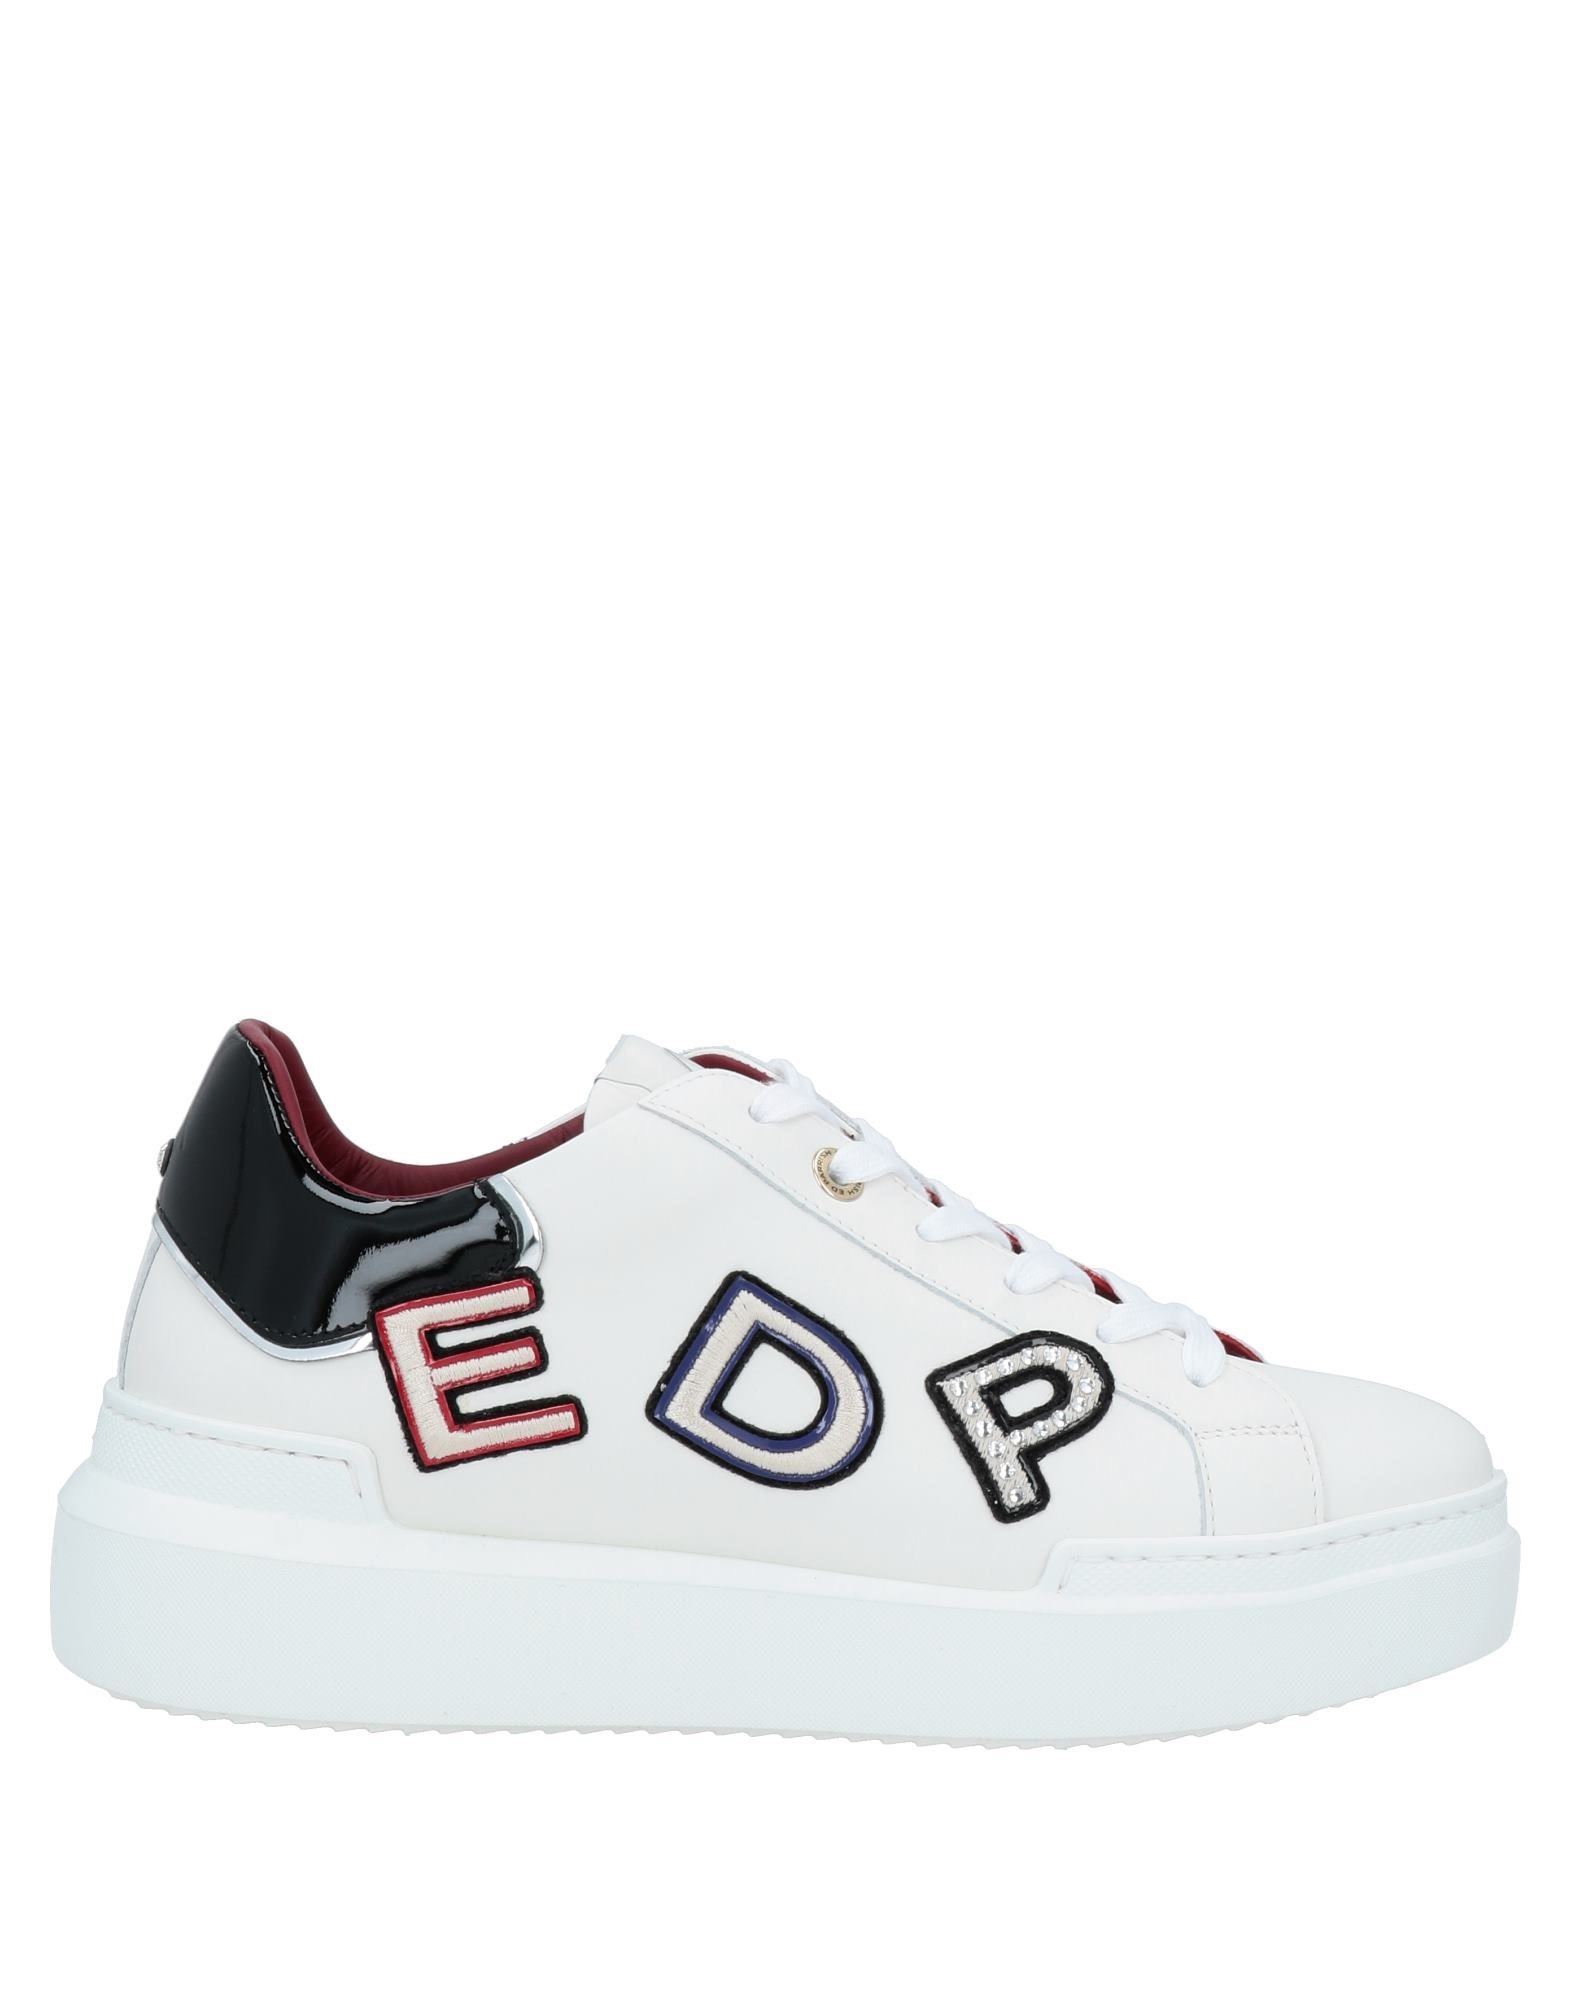 ED PARRISH Sneakers